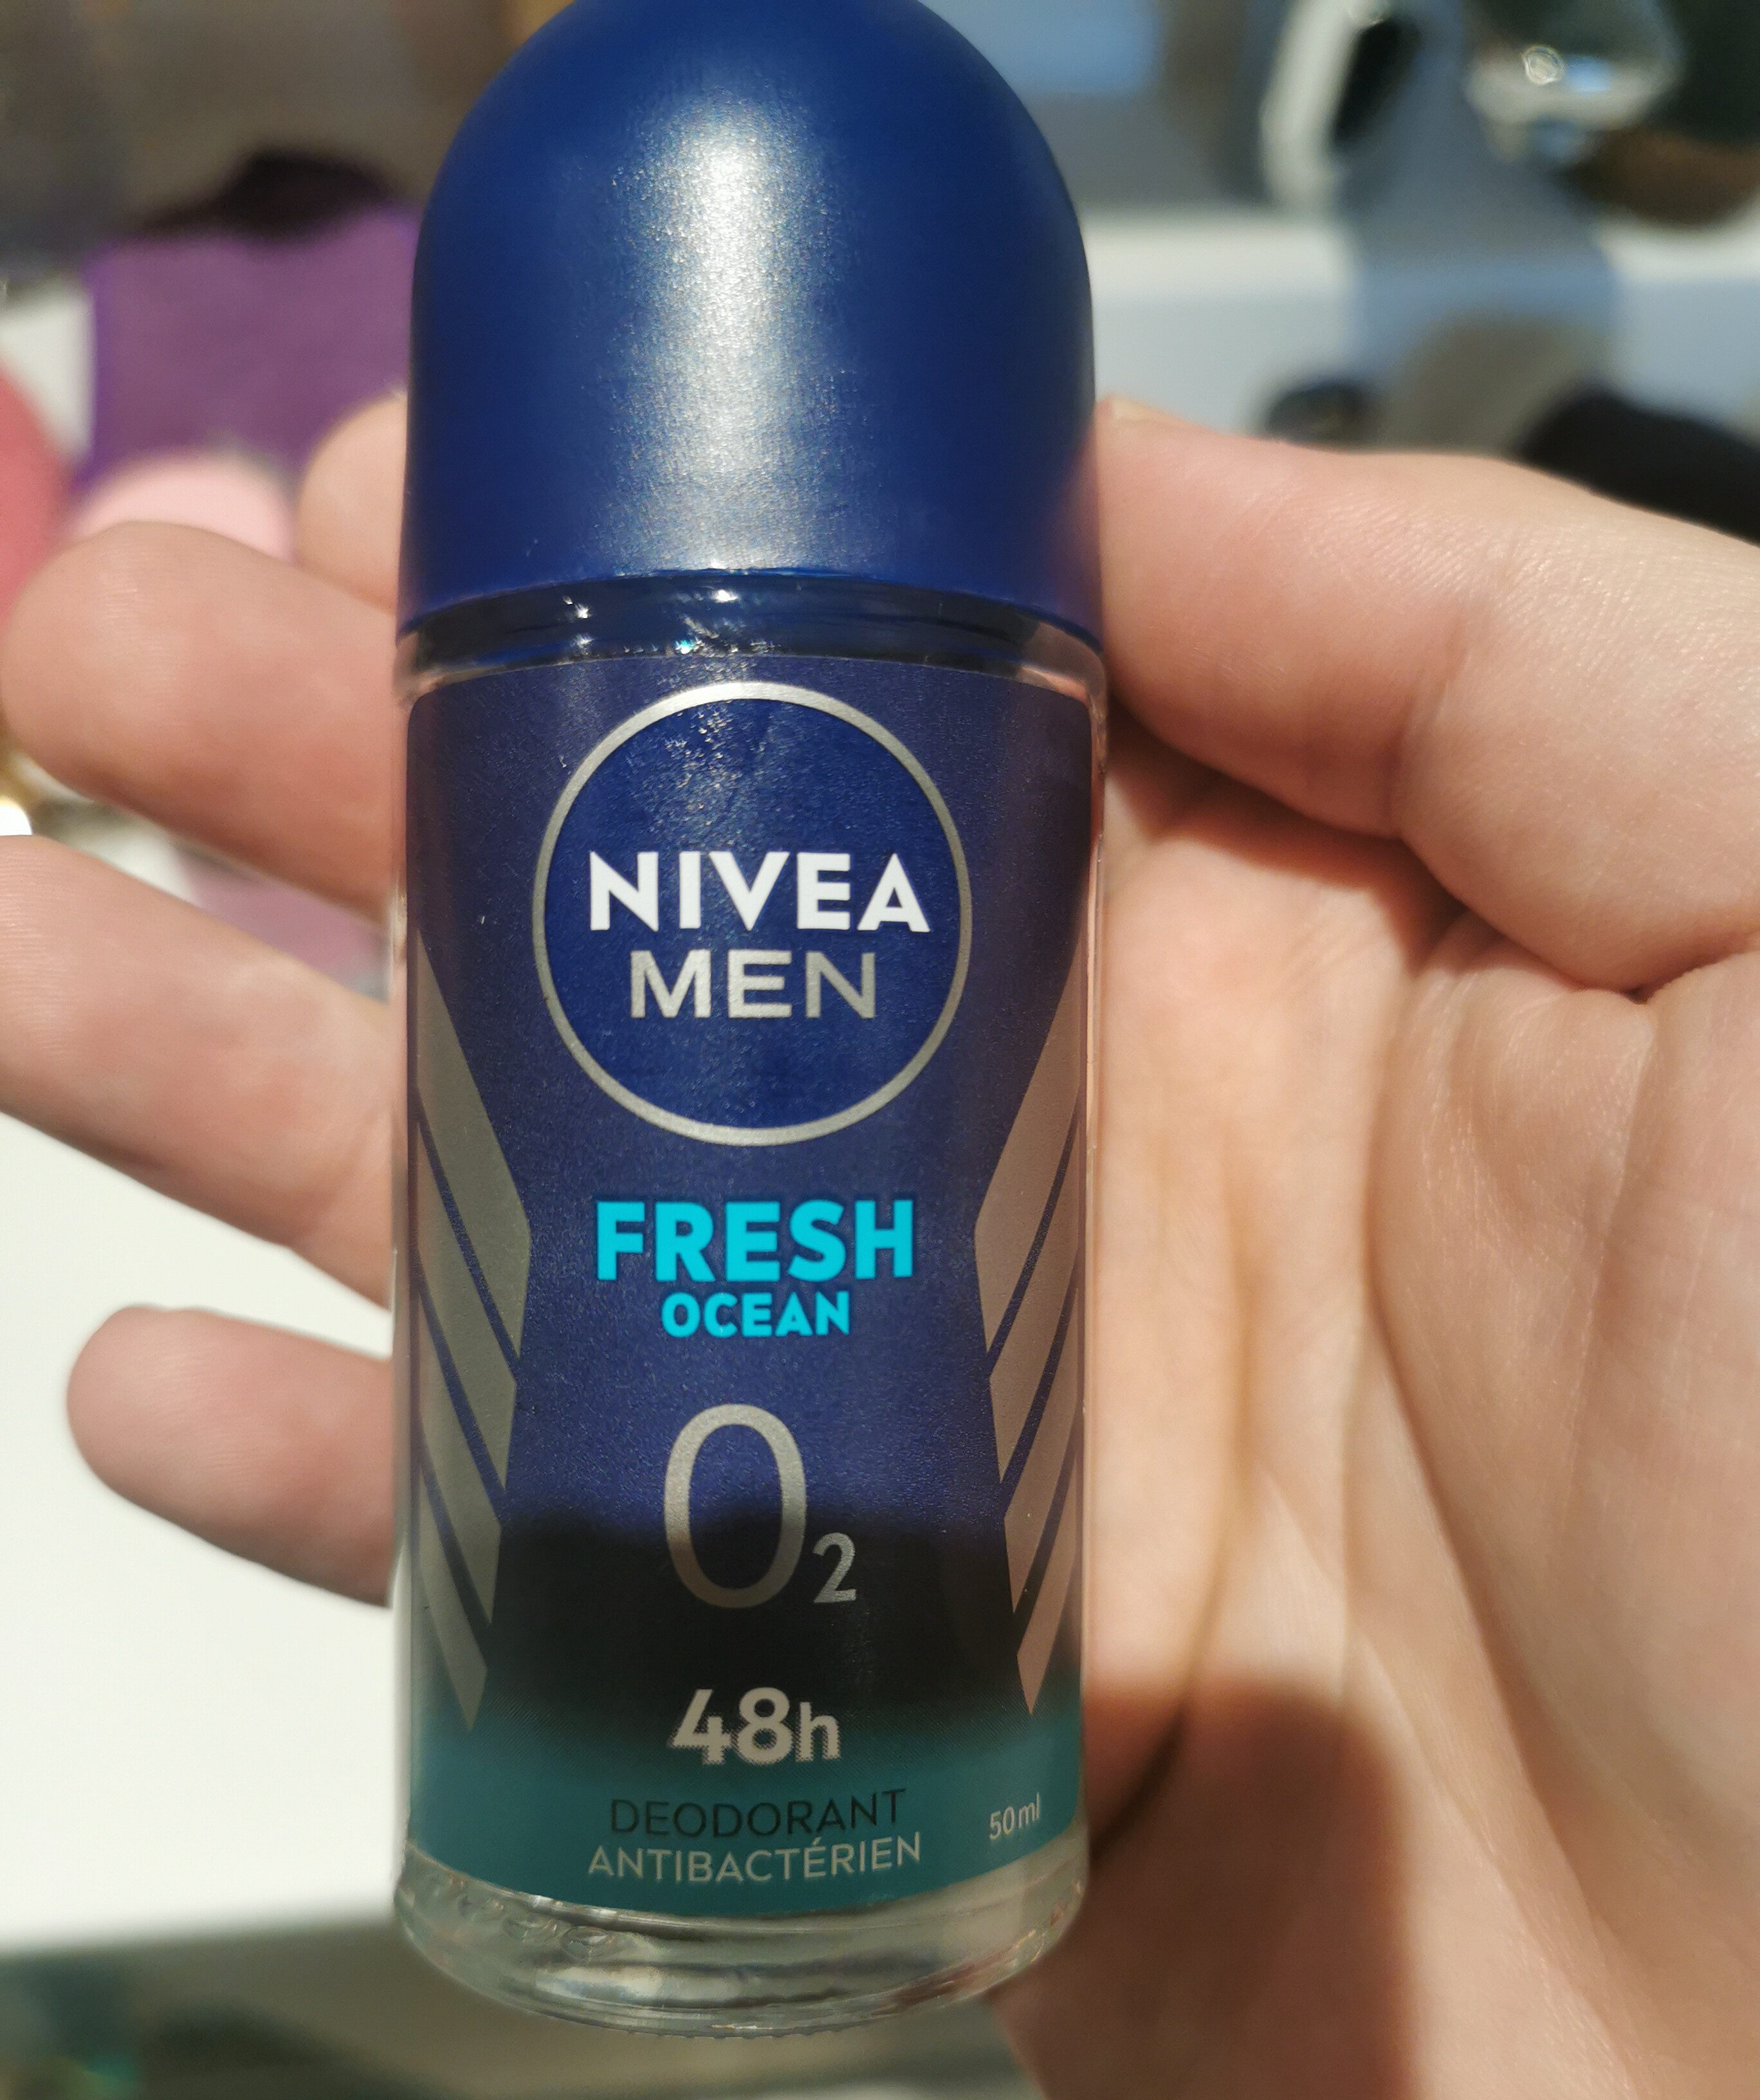 Nivea men Fresh Ocean - Product - fr